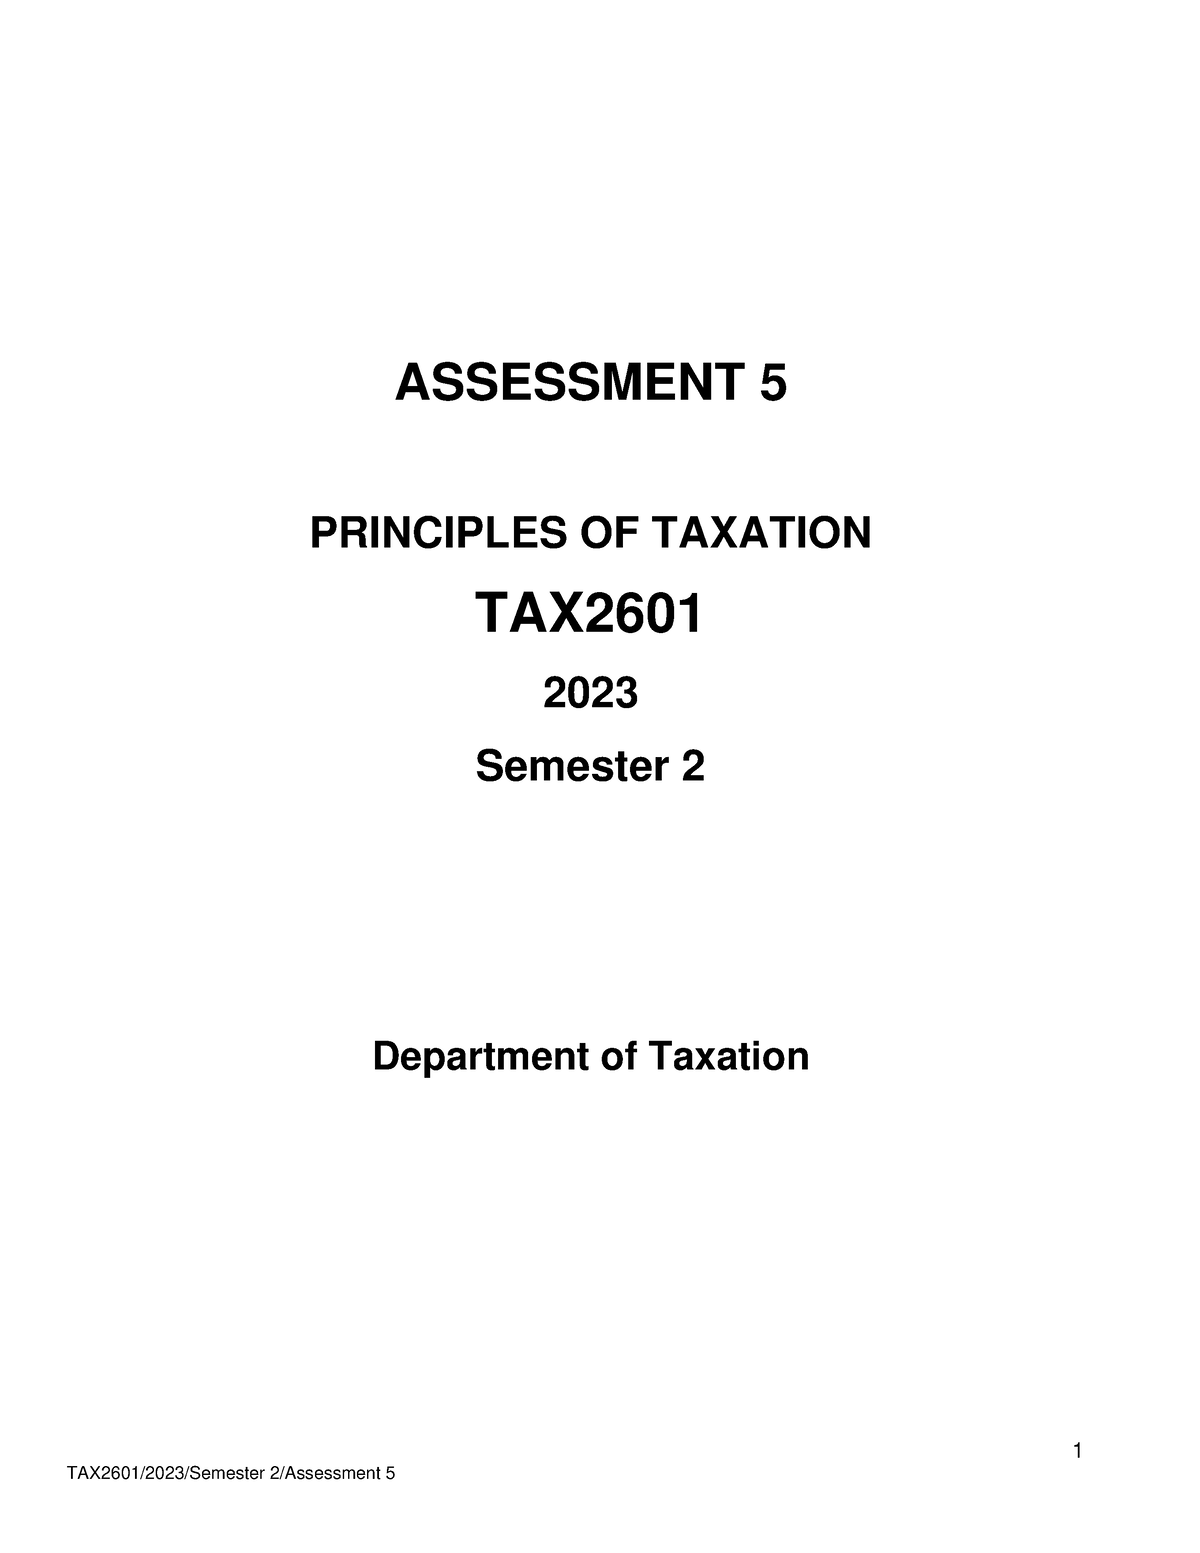 tax2601 assignment 5 2023